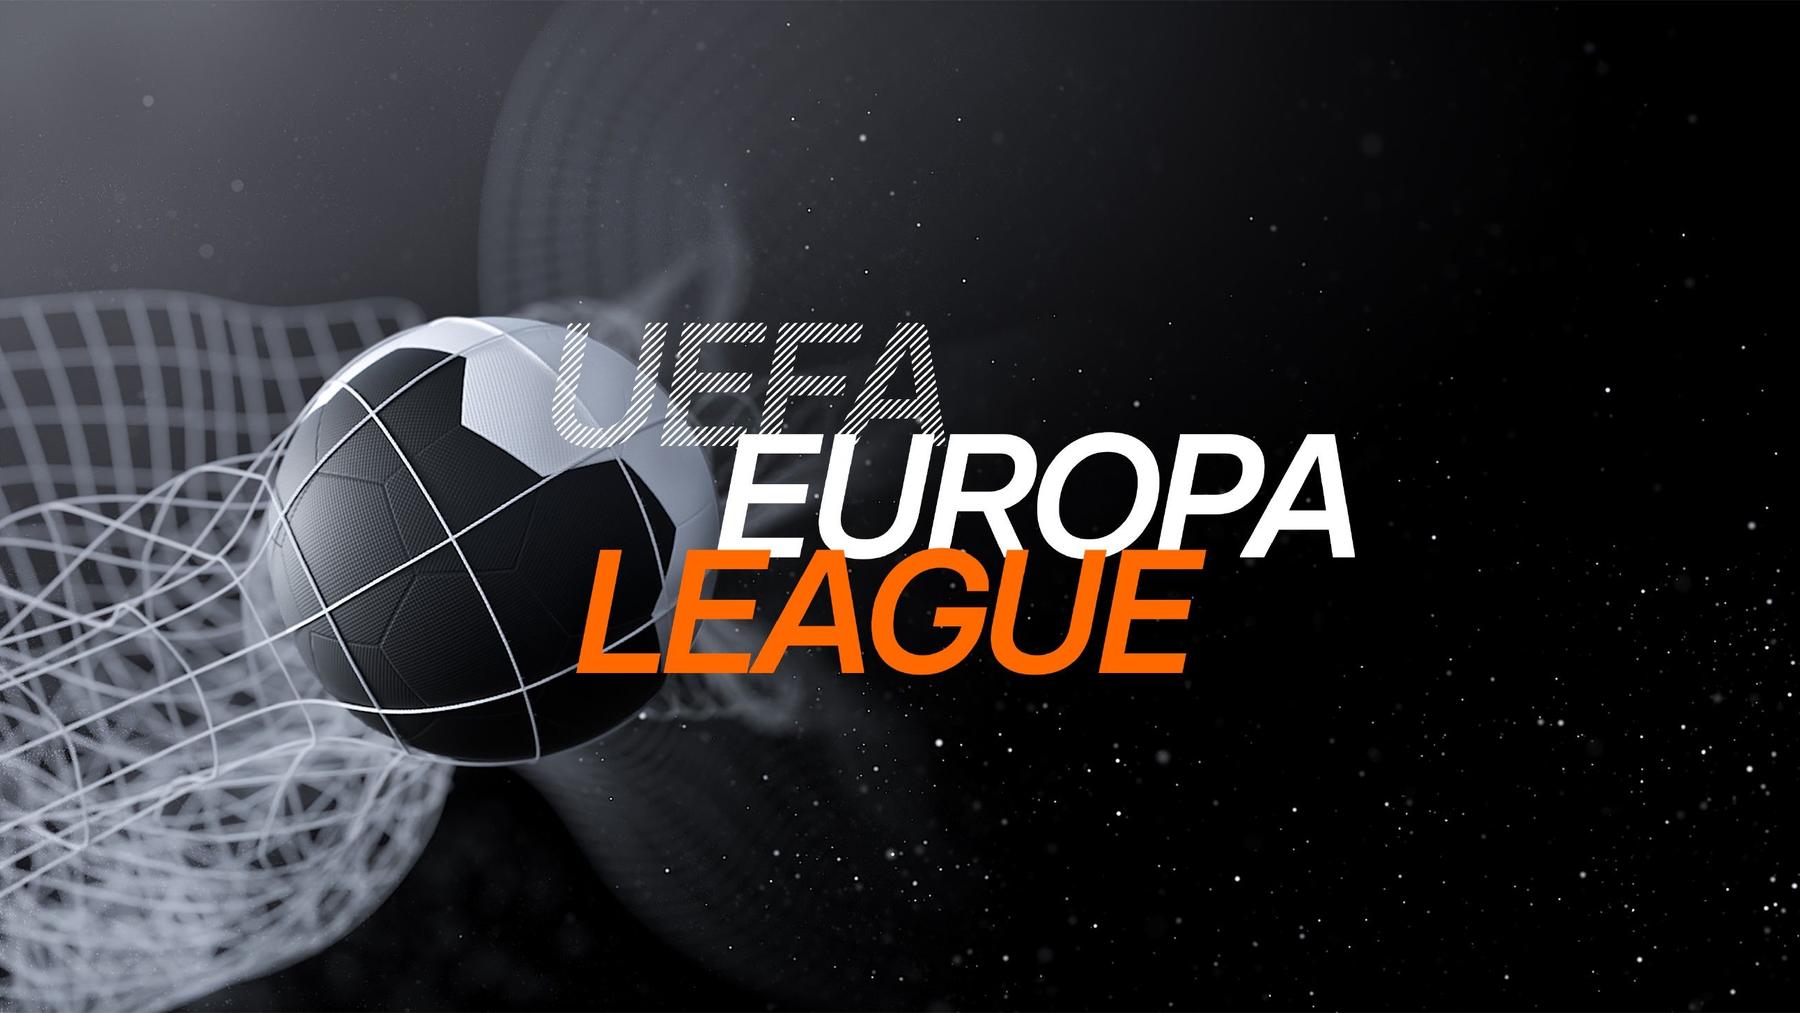 UEFA Europa League: 2. Hälfte